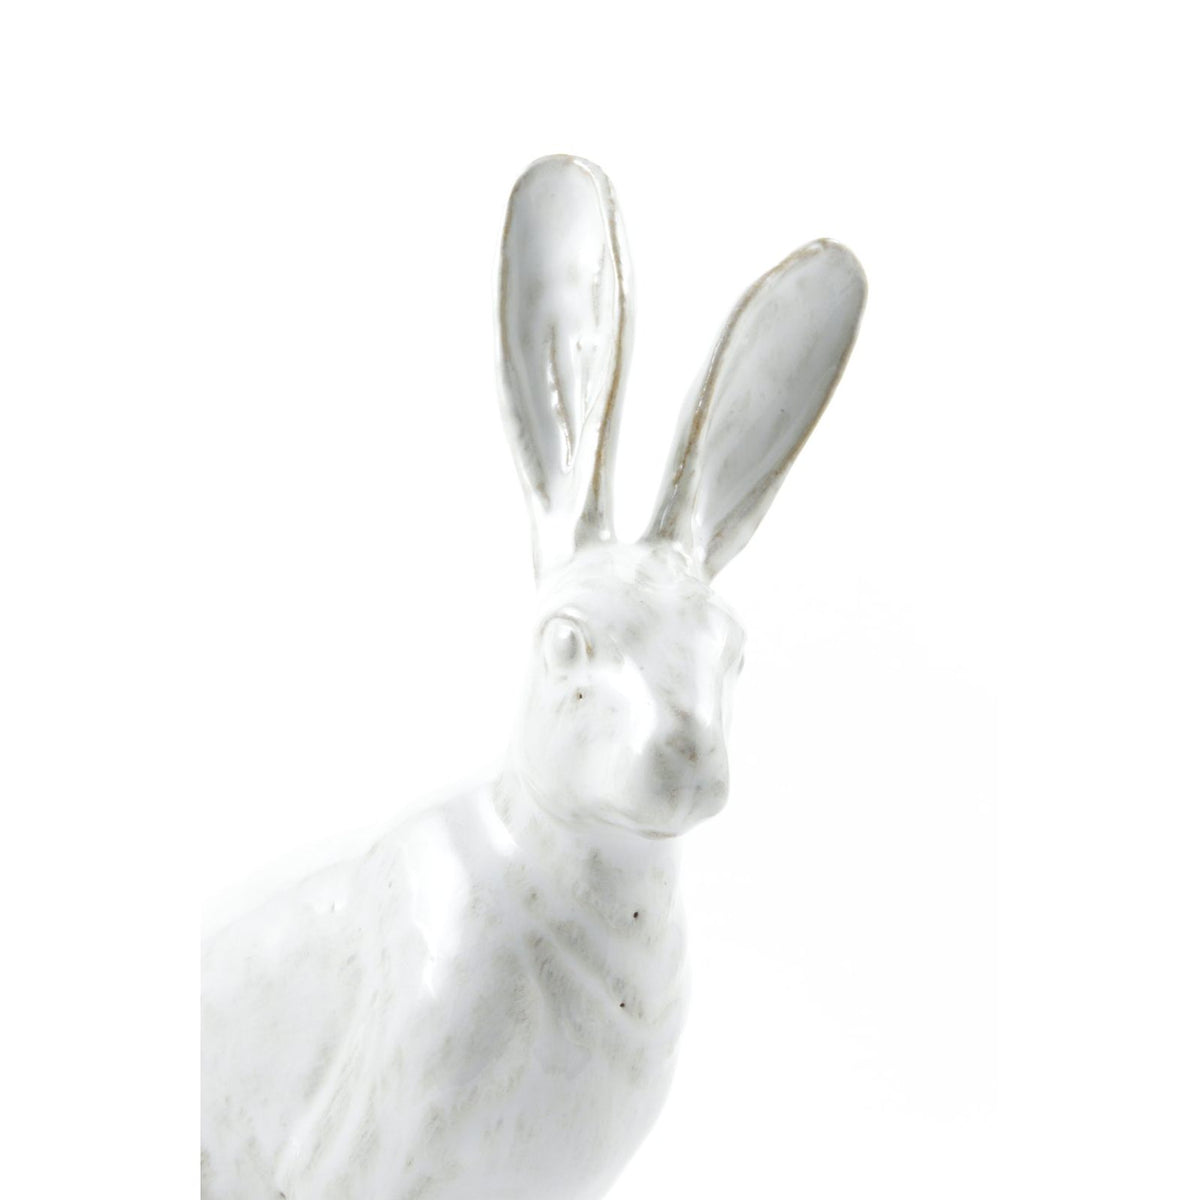 Sitting Rabbit Sculpture